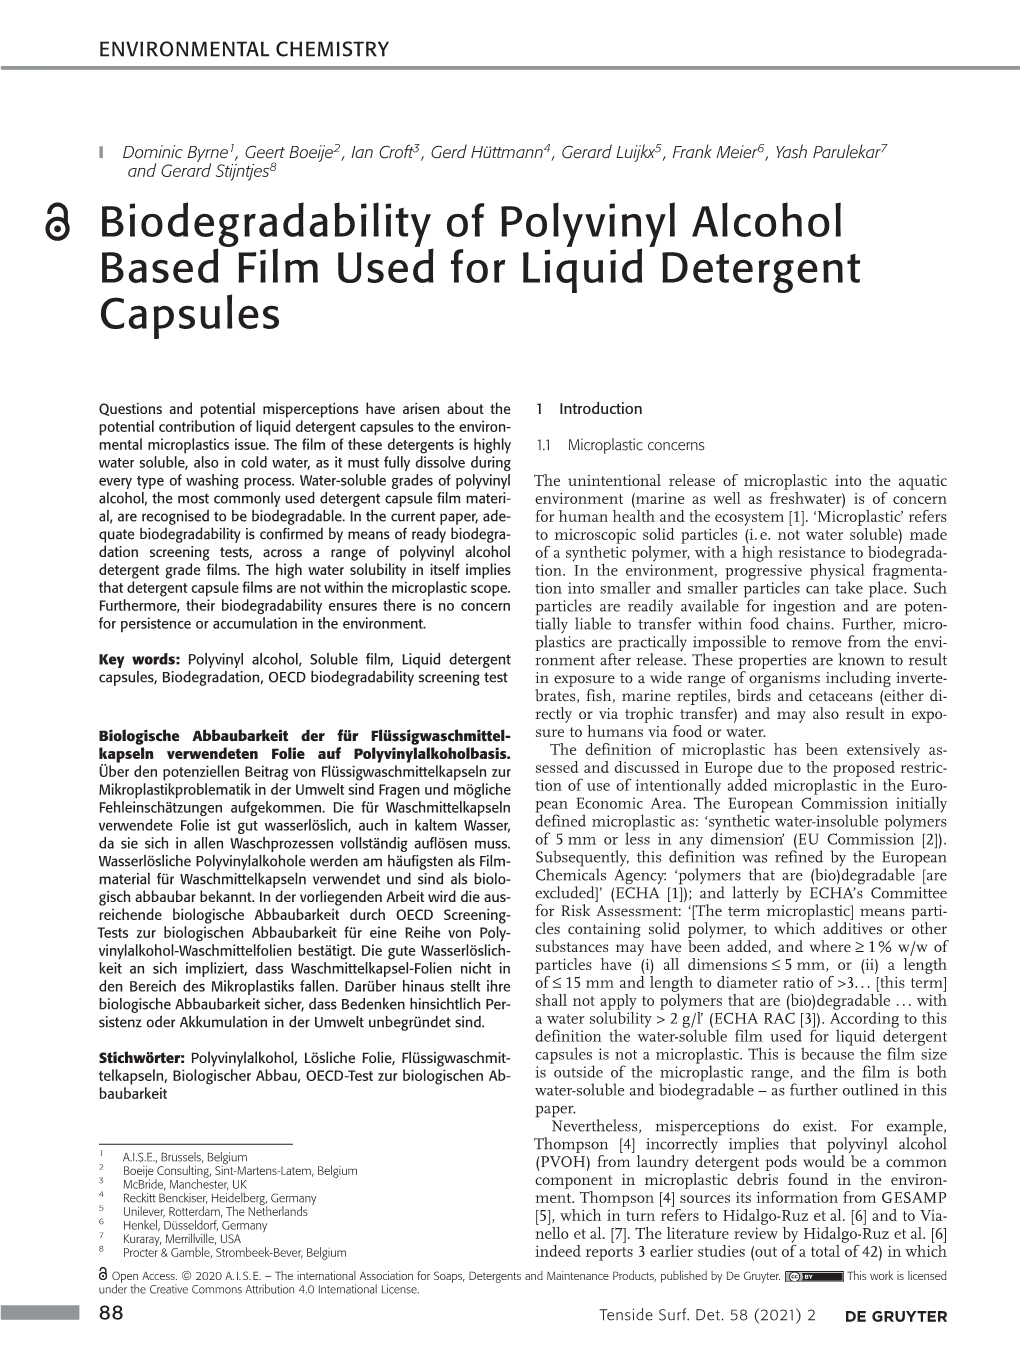 Biodegradability of Polyvinyl Alcohol Based Film Used for Liquid Detergent Capsules